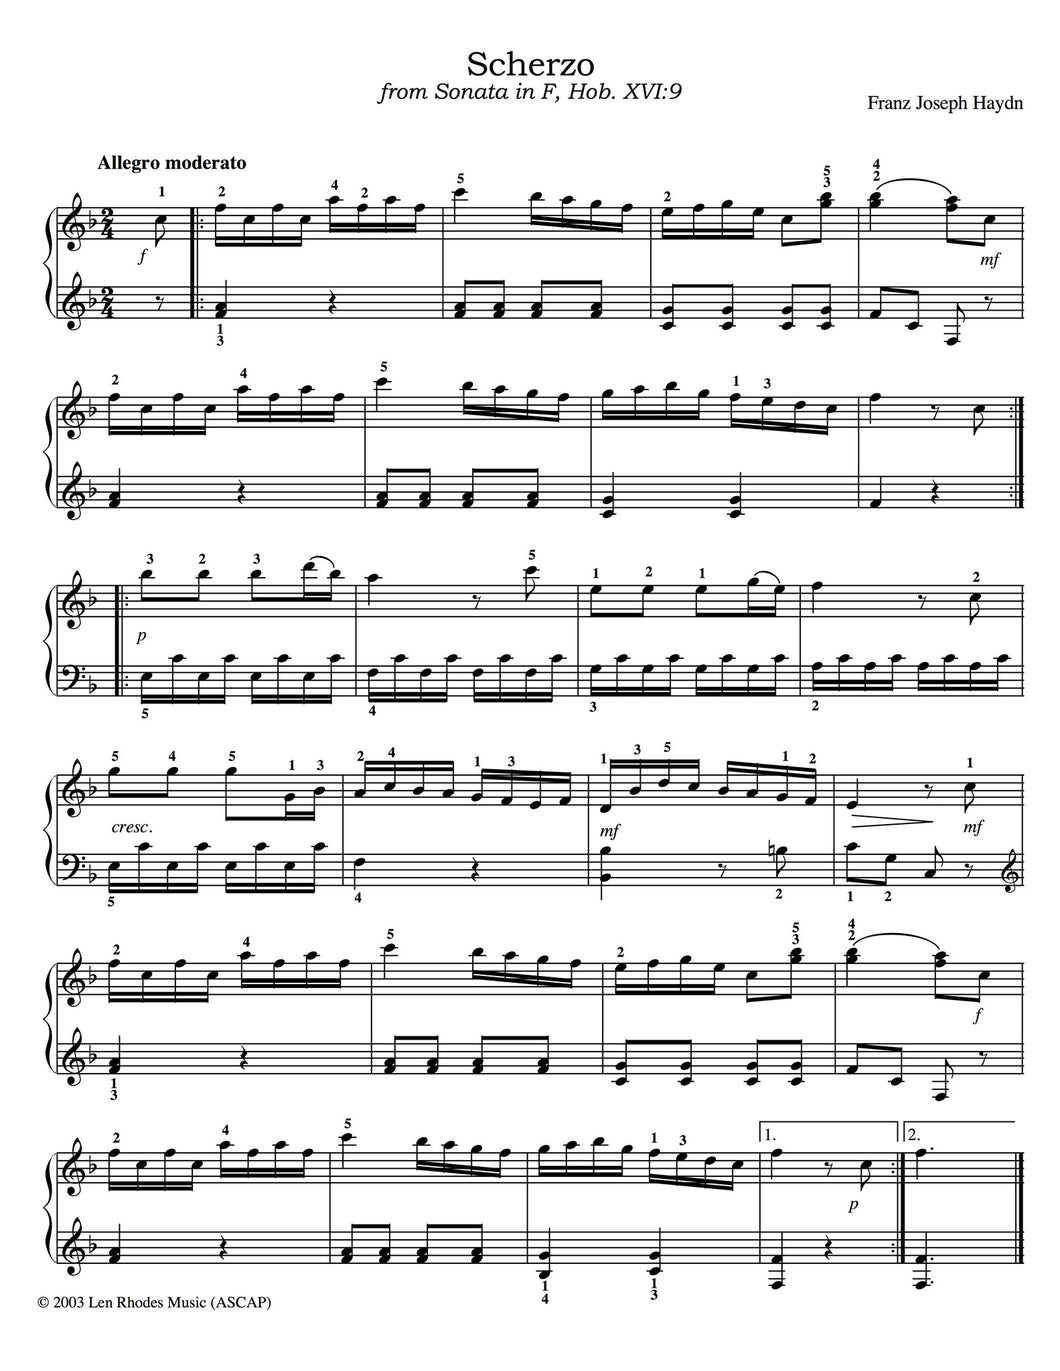 Scherzo, from Sonata in F, Hob. XVI:9, Haydn - Piano